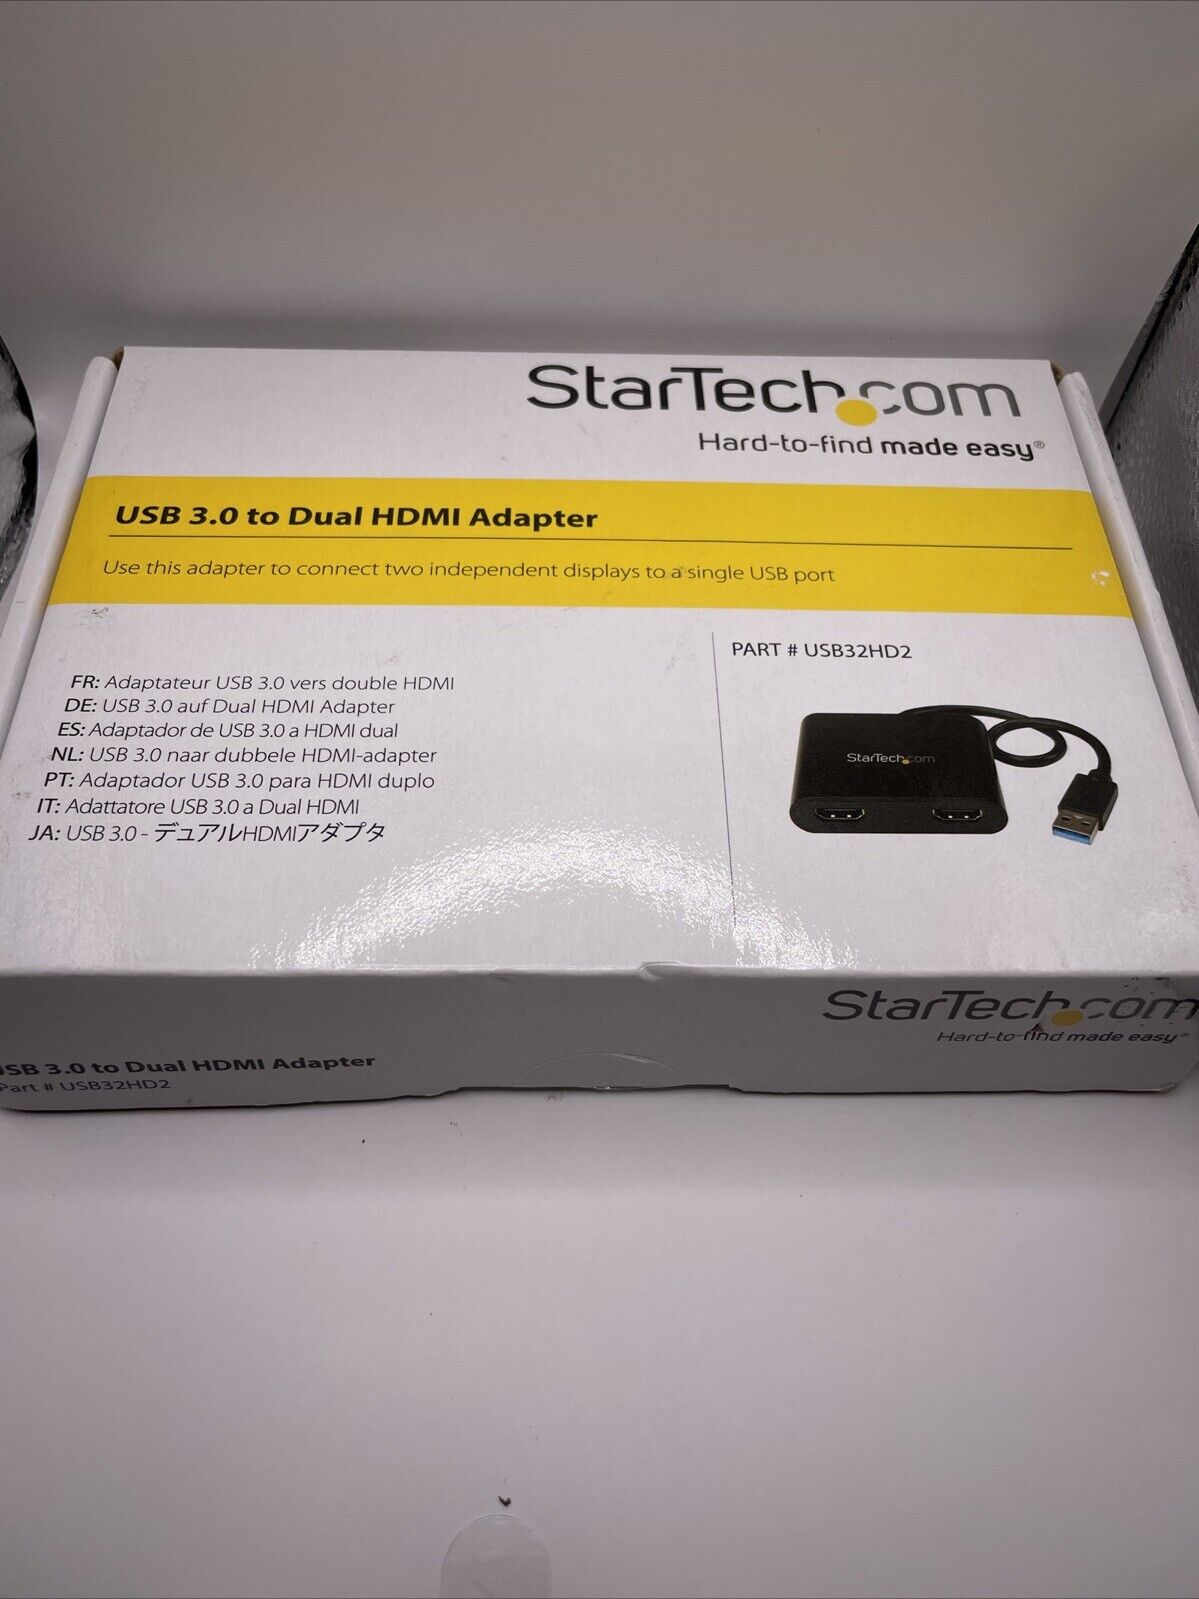 Startech.com USB32HD2 USB 3.0 to Dual HDMI Adapter Black Open Box